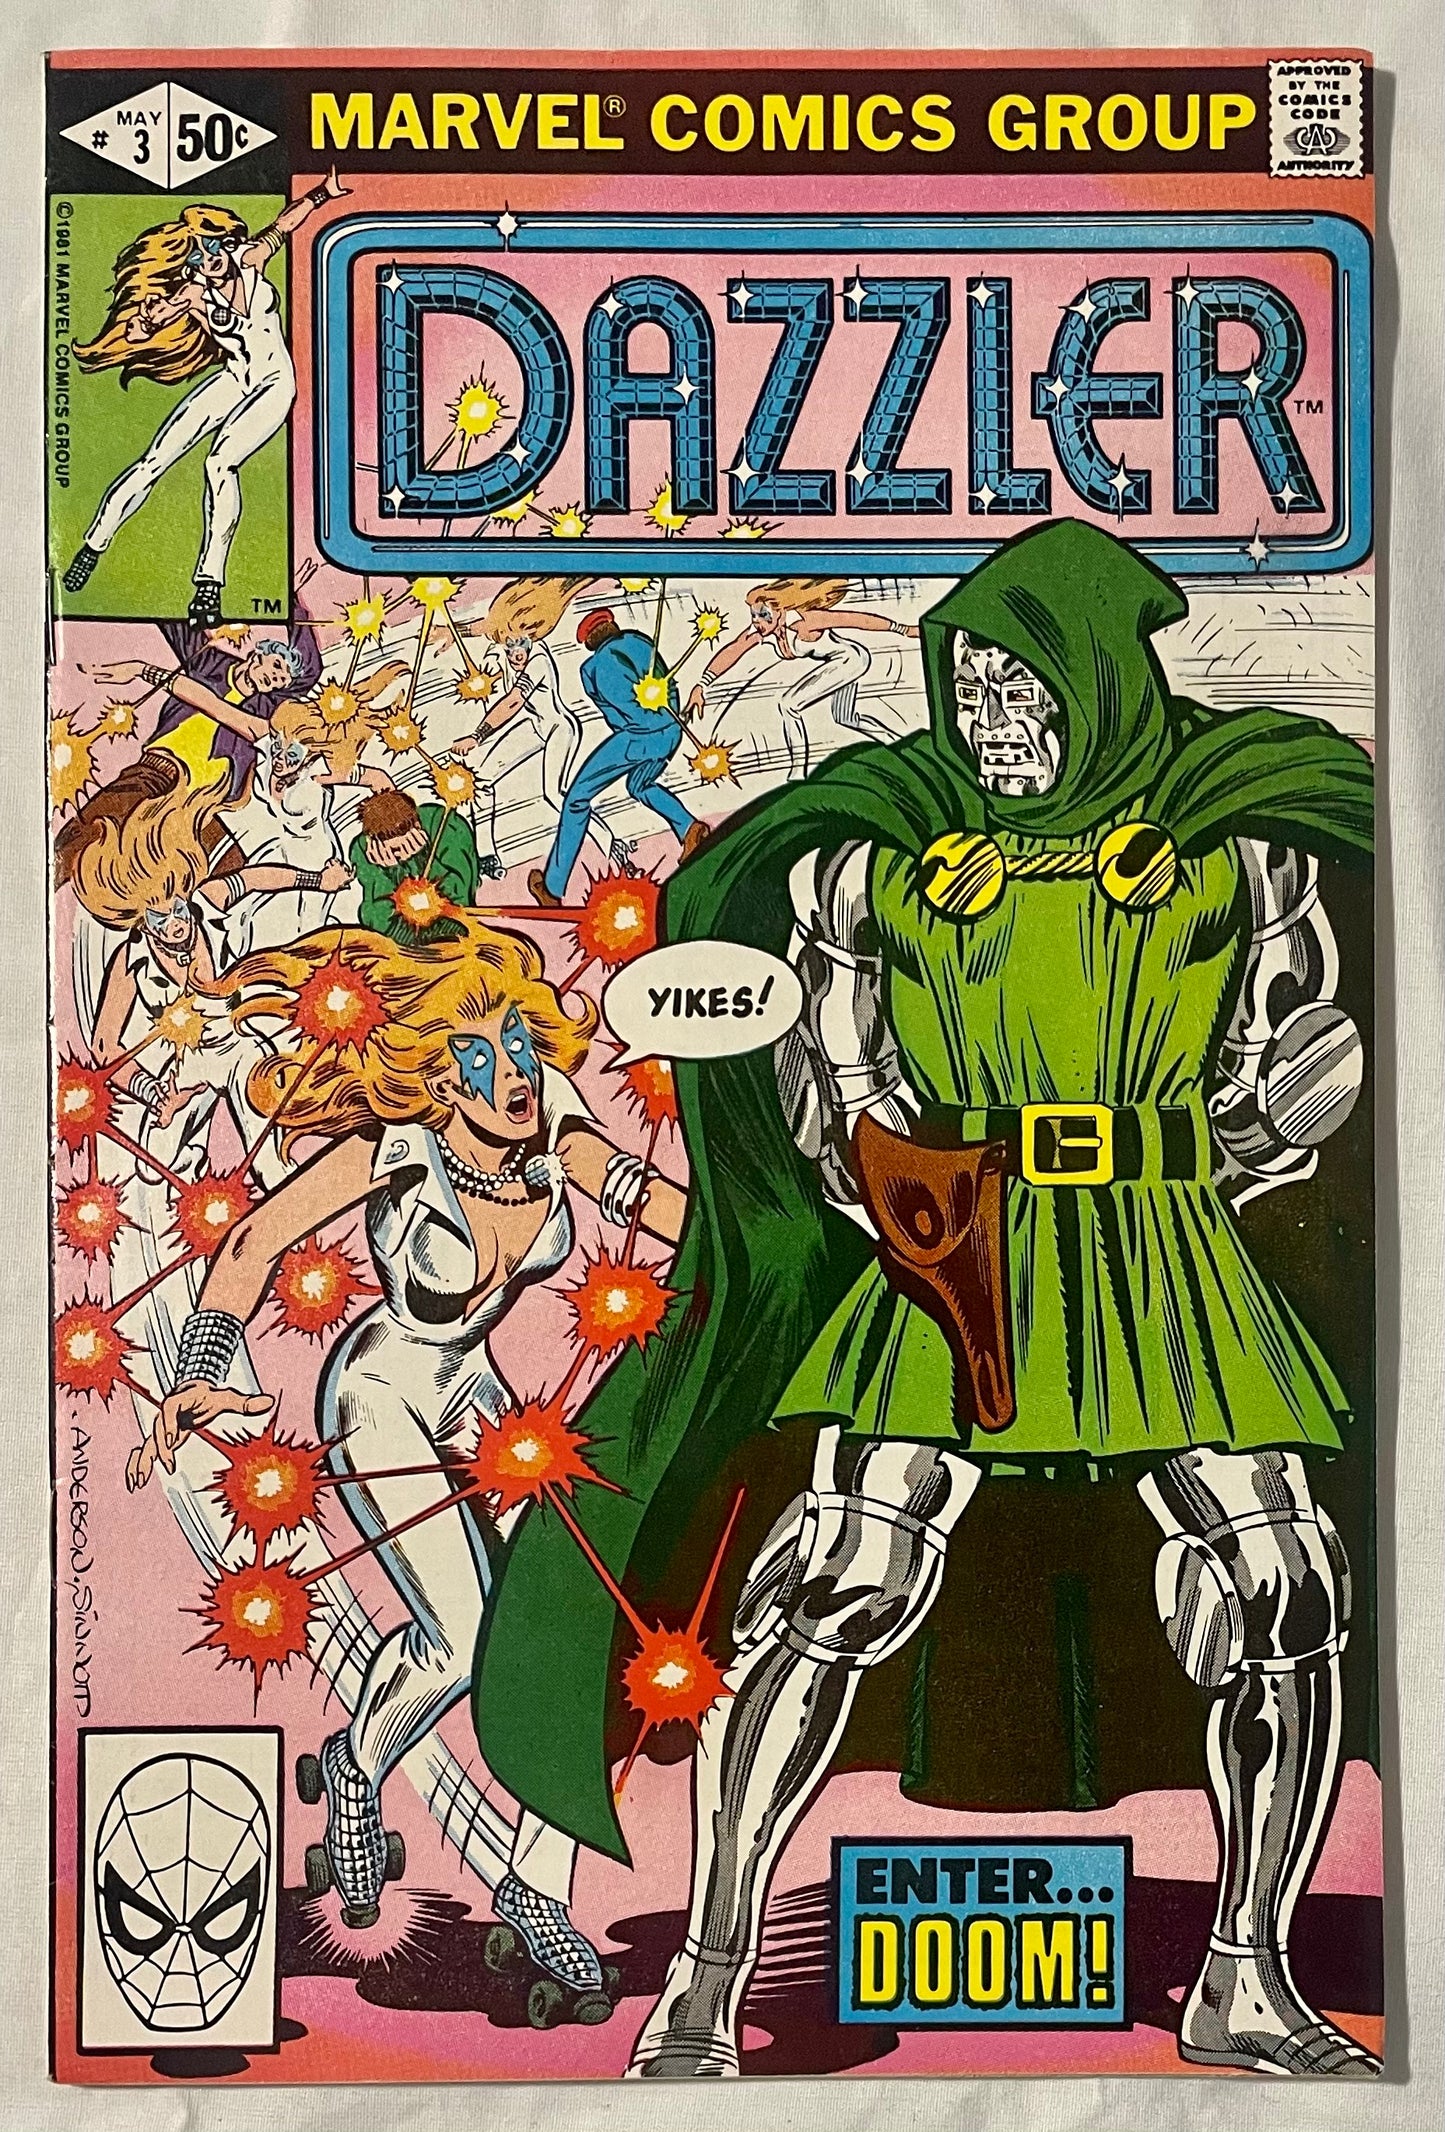 Marvel Comics Dazzler #3